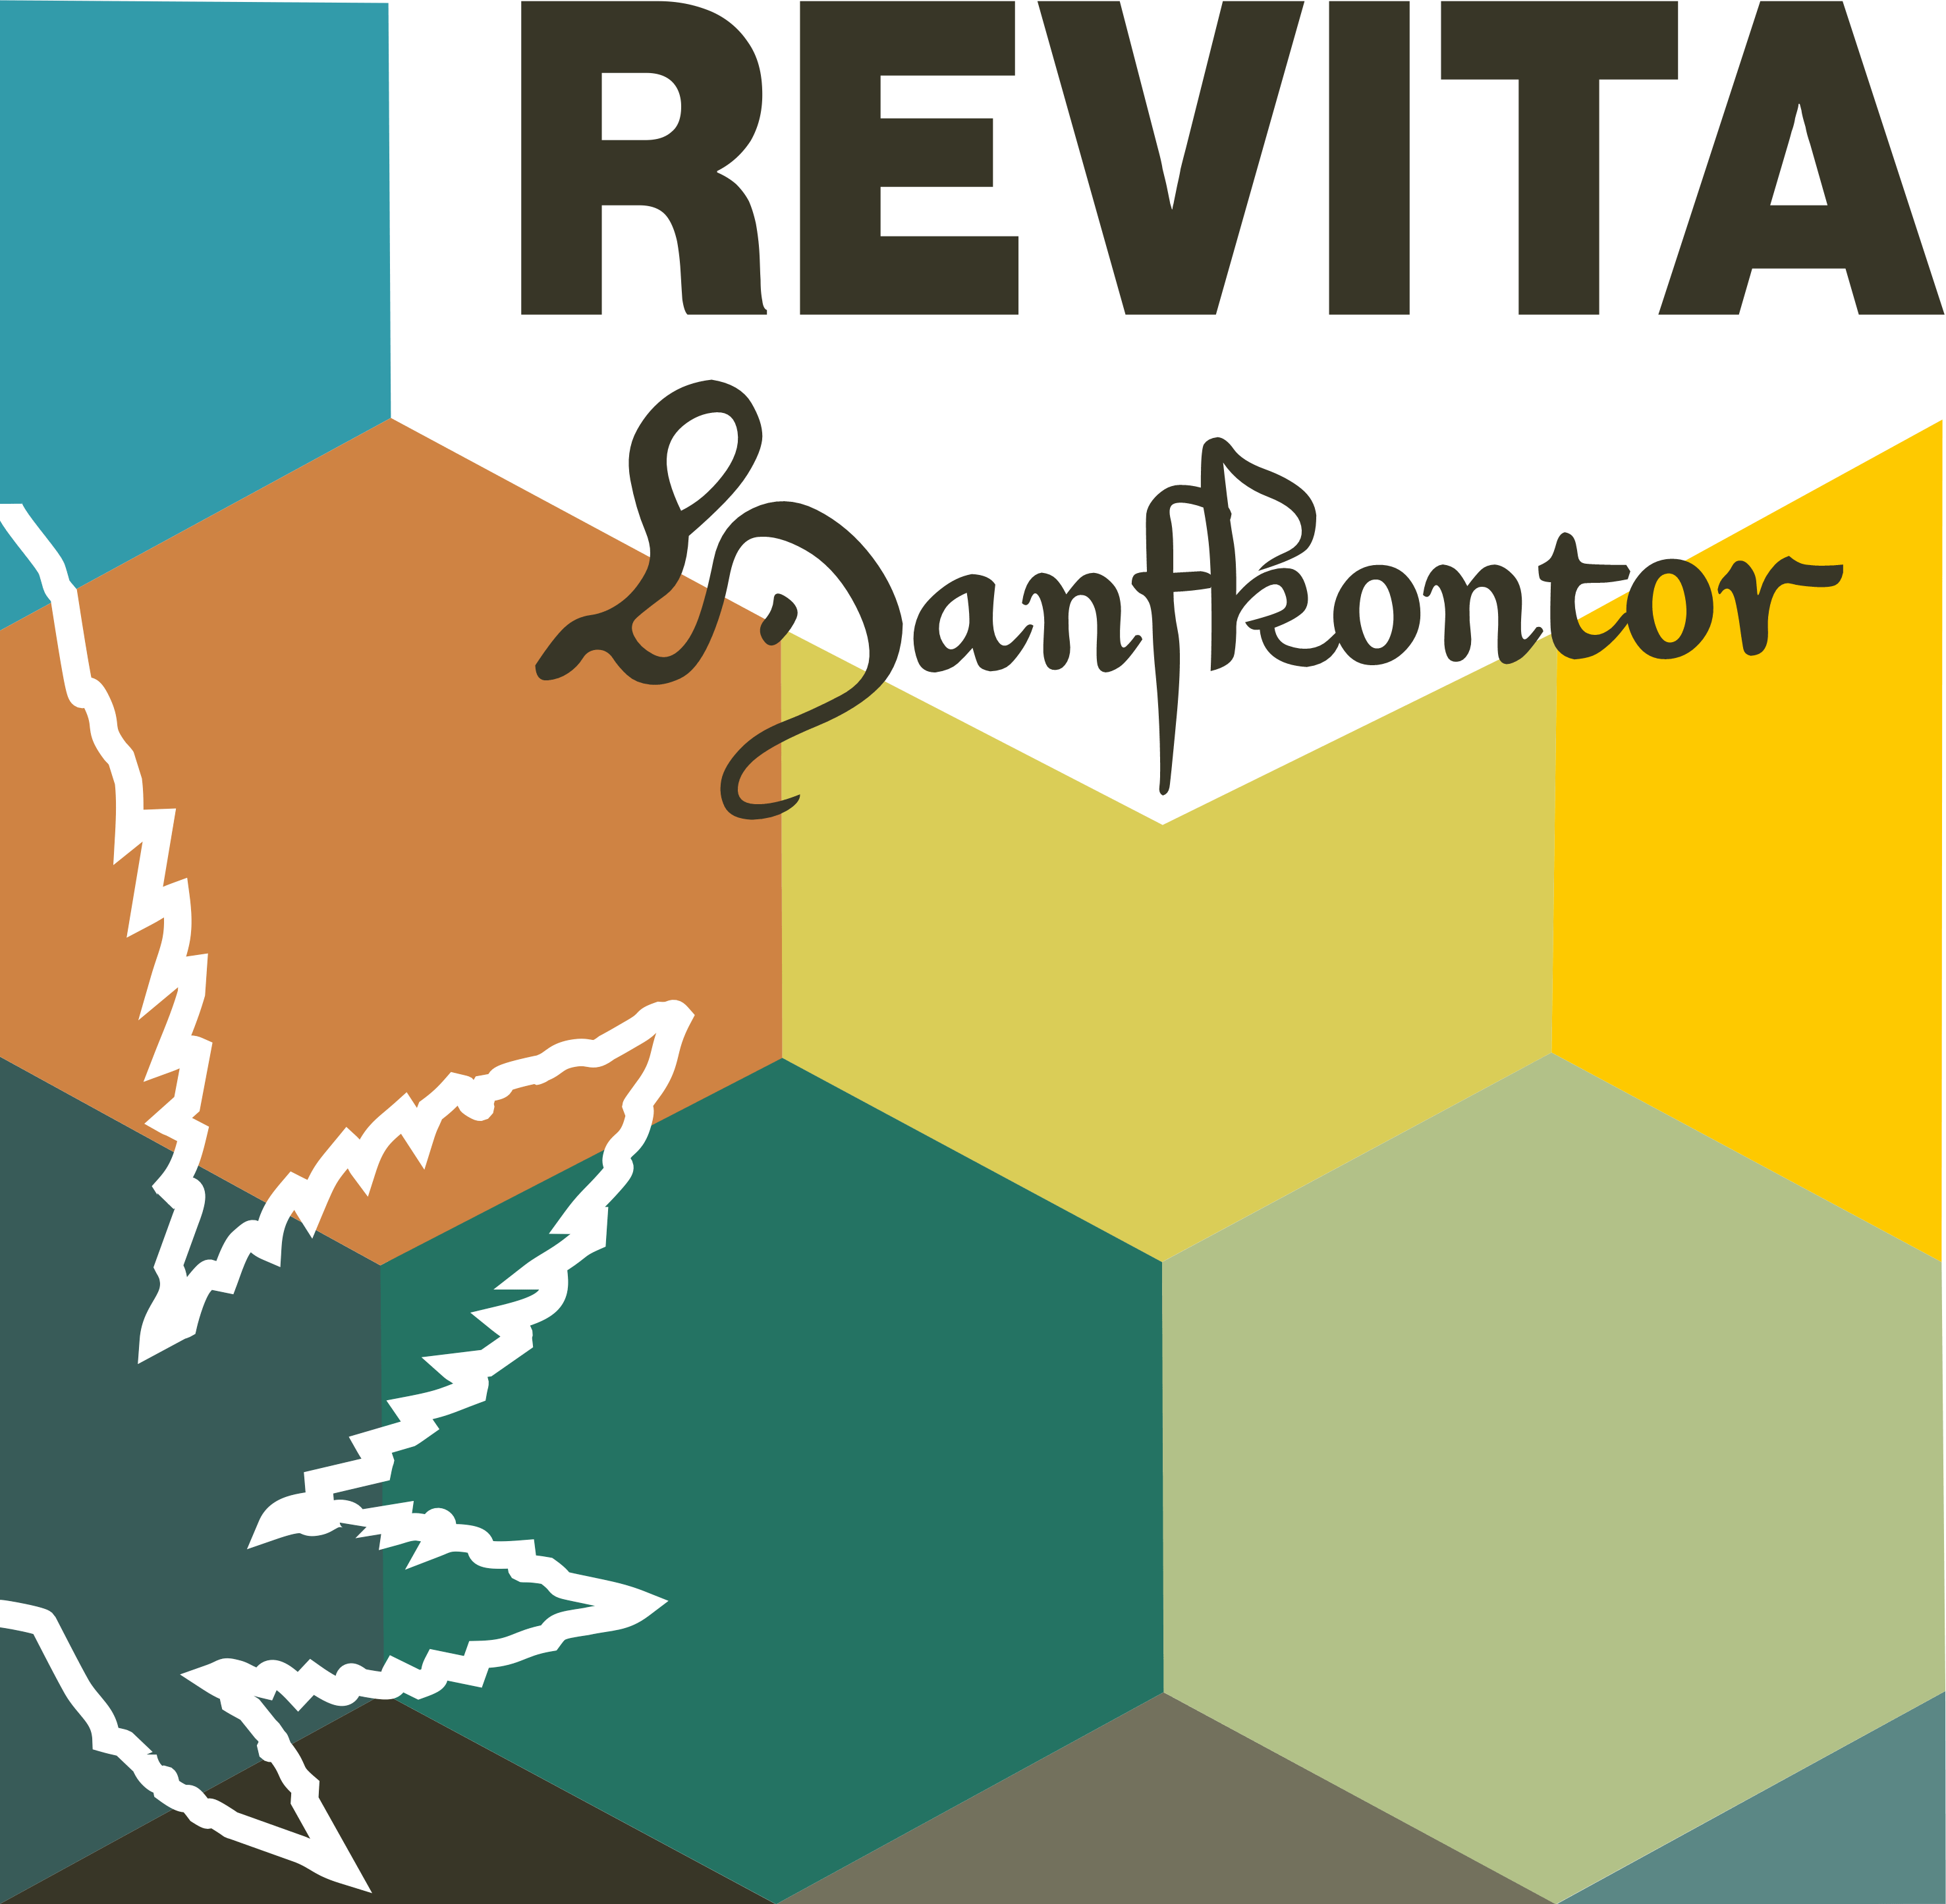 Revita Hanfkontor GmbH